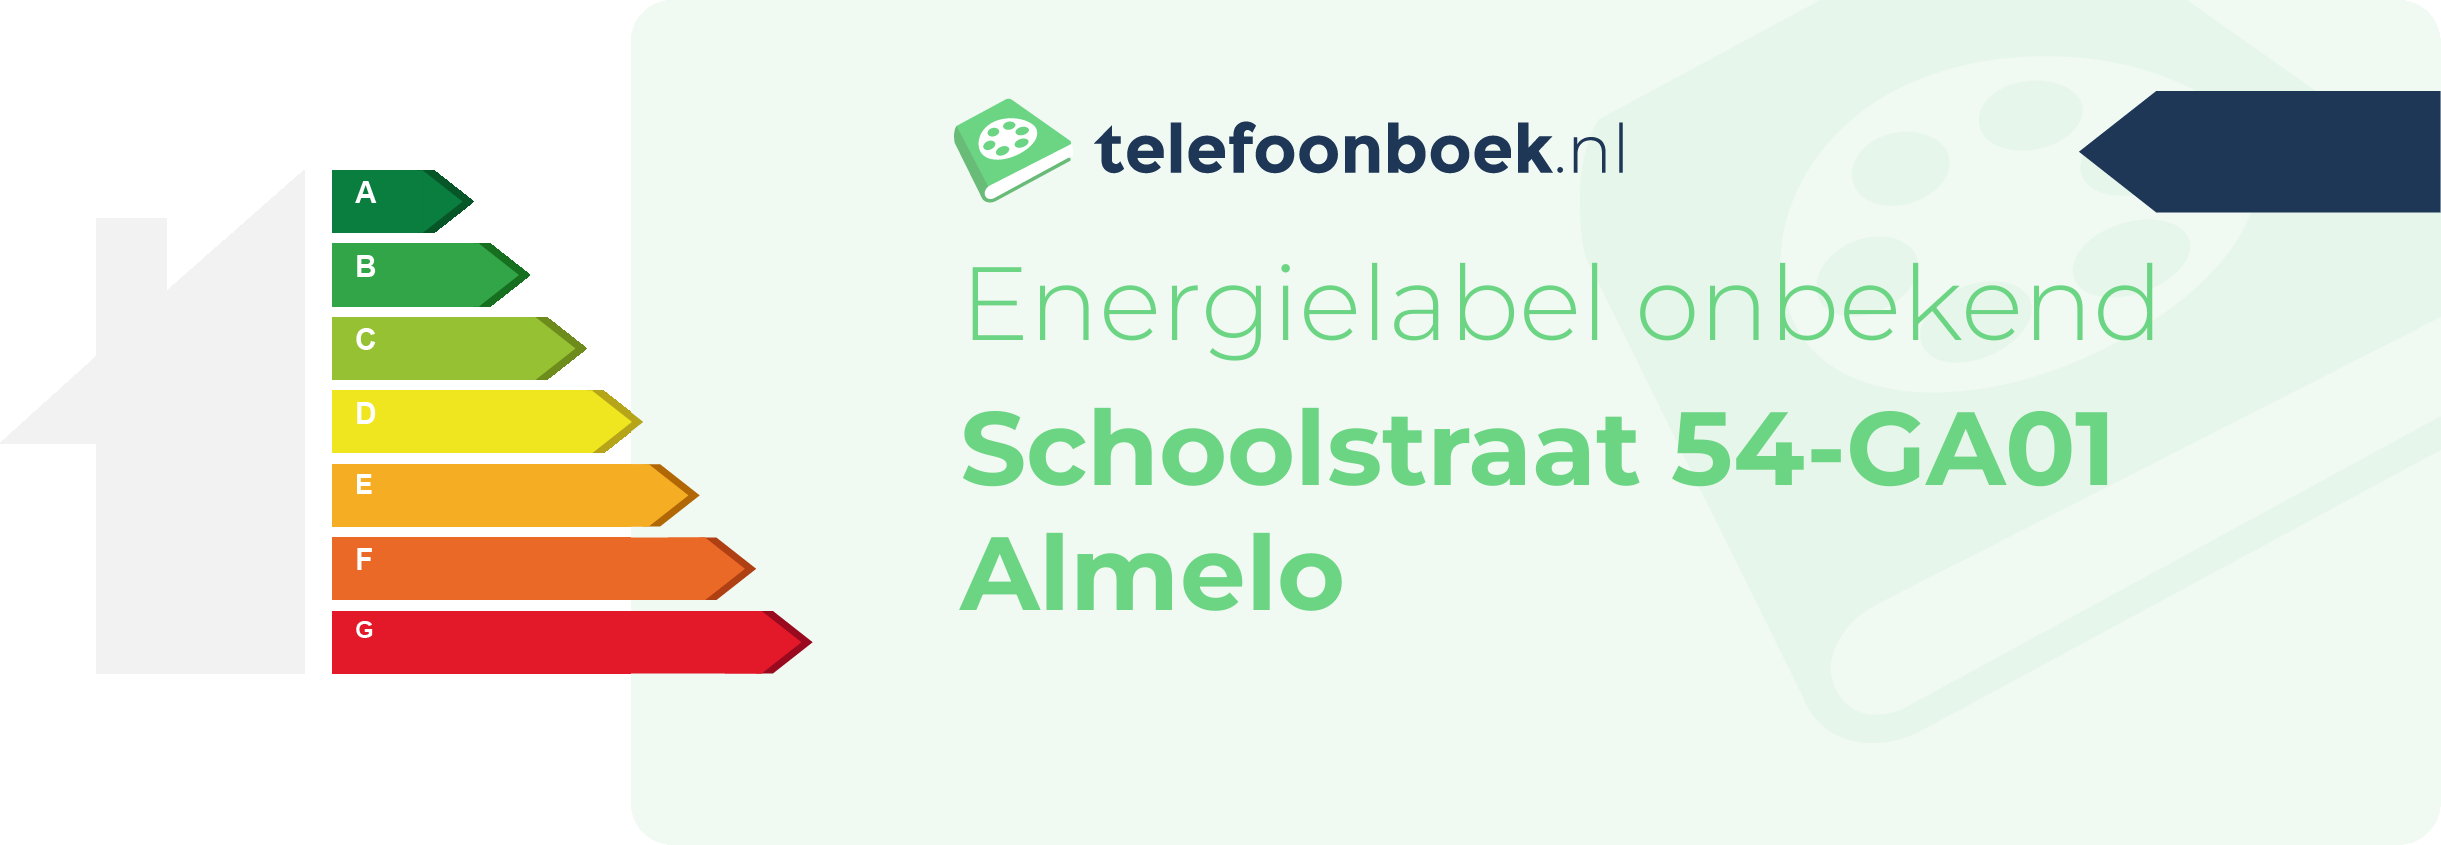 Energielabel Schoolstraat 54-GA01 Almelo